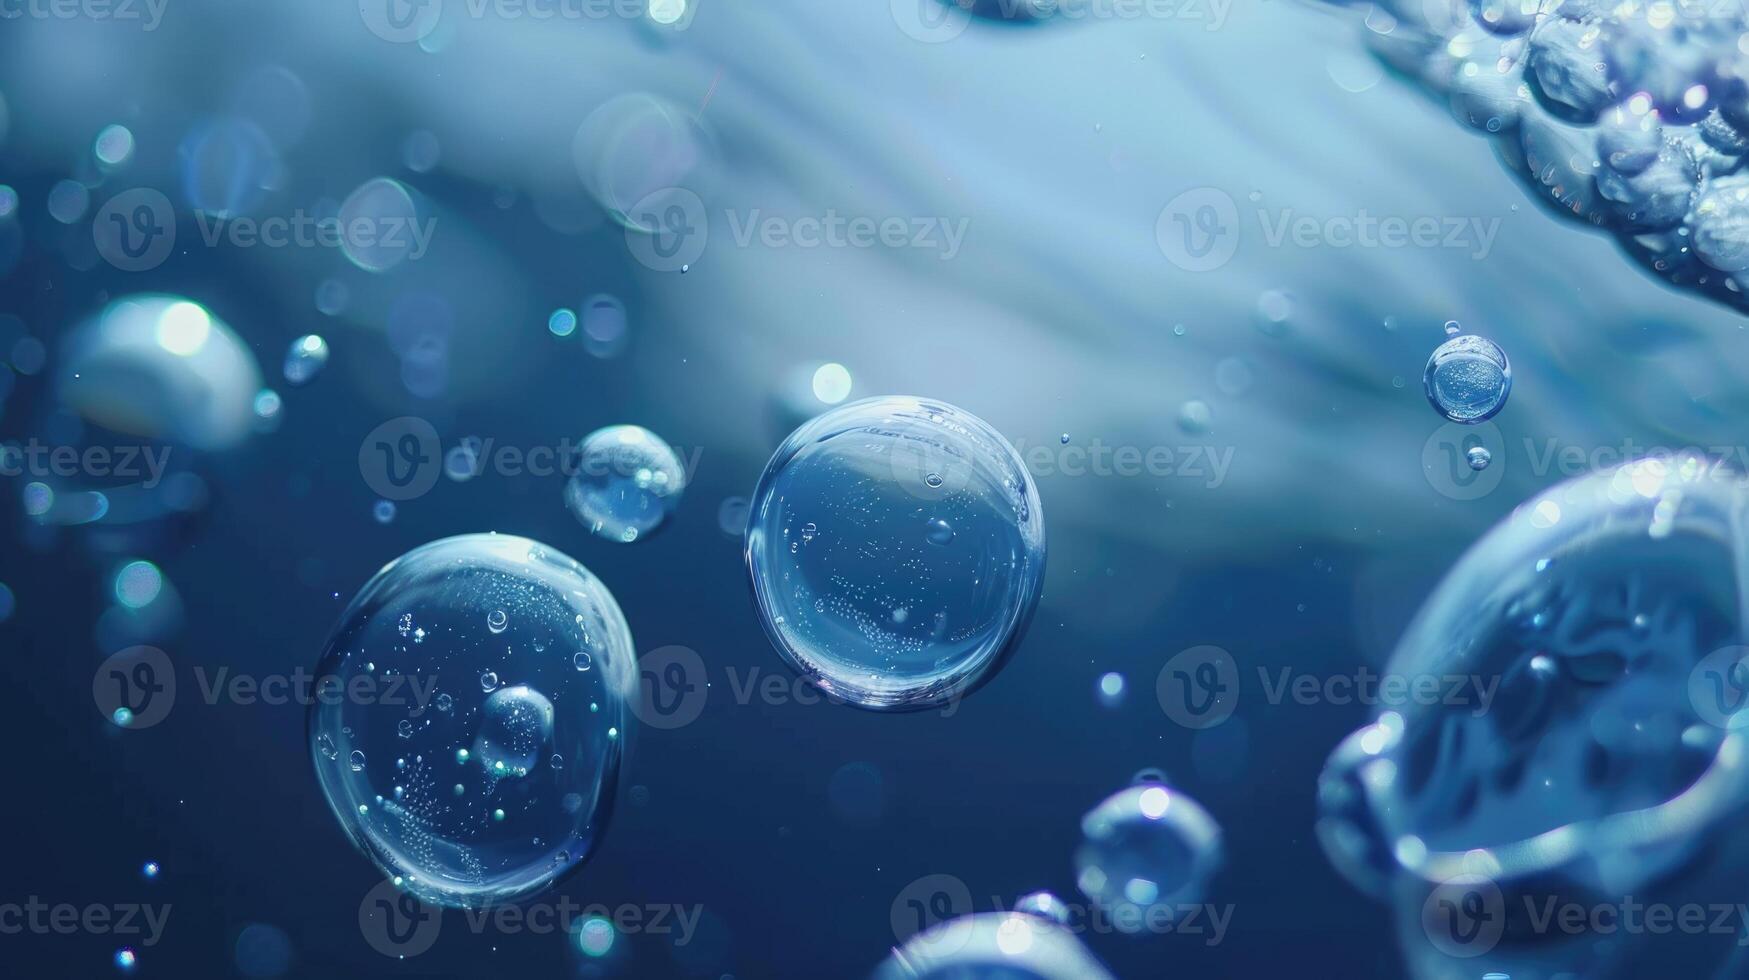 luftbubblor i vattnet bakgrund. blå ton. foto